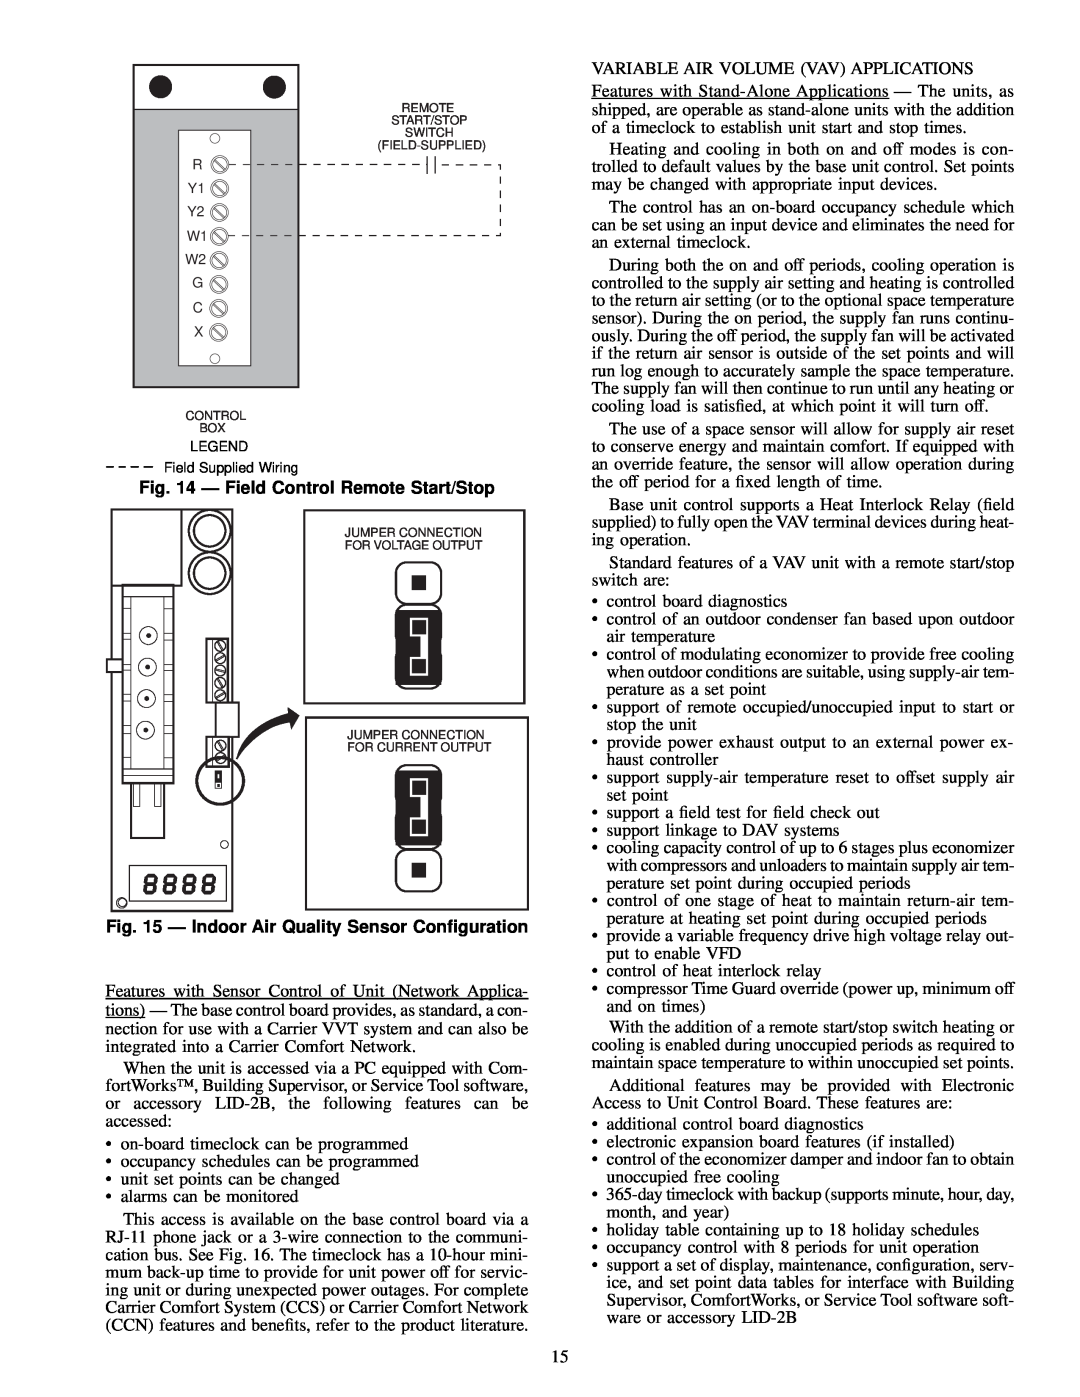 Carrier EY024-048, 48EJ, EW, EK Ð Field Control Remote Start/Stop, Ð Indoor Air Quality Sensor Conguration 